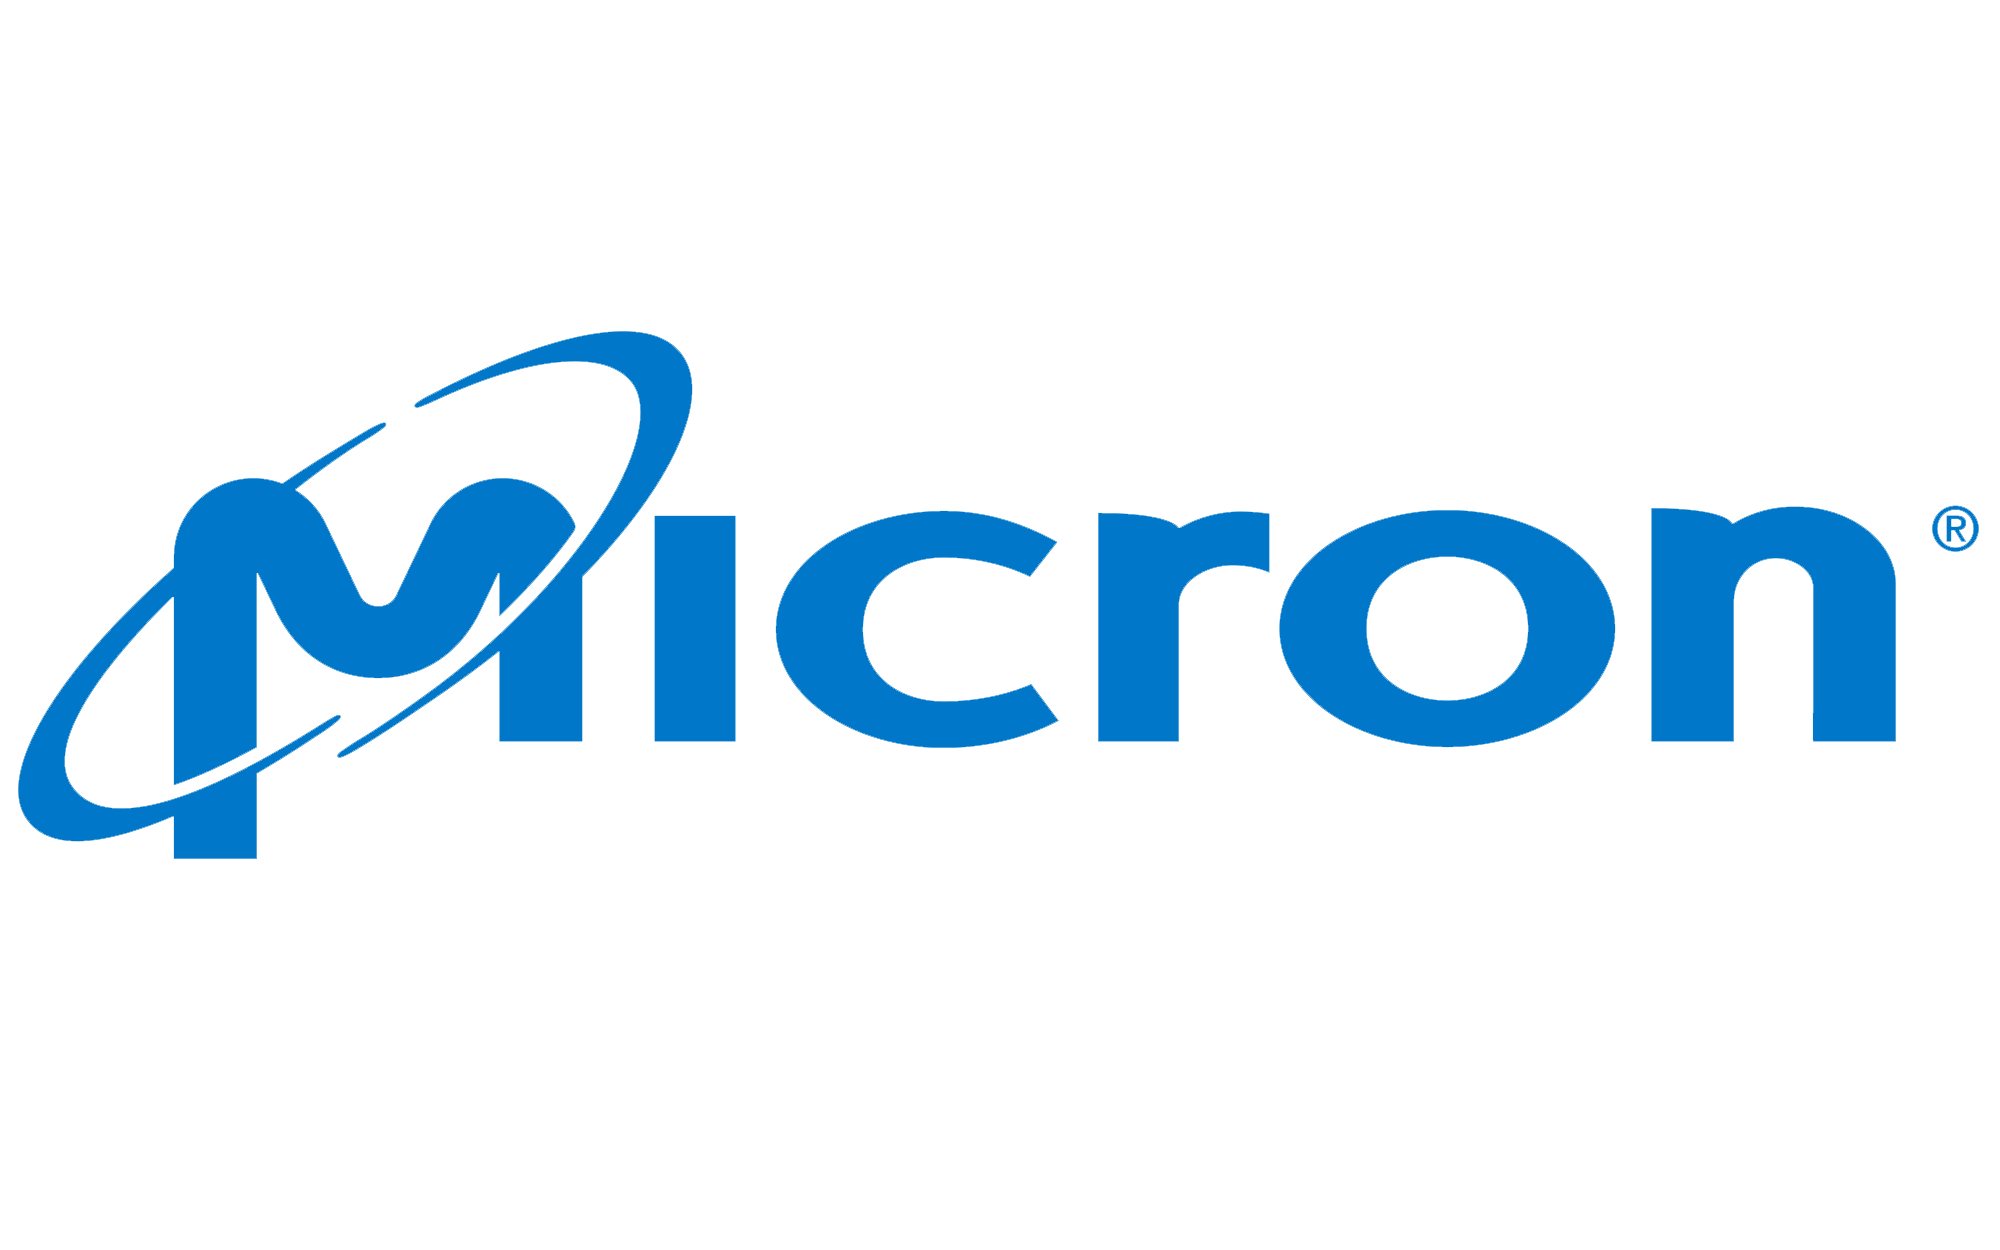 Micron 7450Pro 1.92TB NVMe U.3 (15MM) Enterprise SSD, R/W 6800-2700MB/s, 800K-120K Iops,Tbw 3.65PB, DWPD 1, MTTF 2M HRS, 5YR WTY